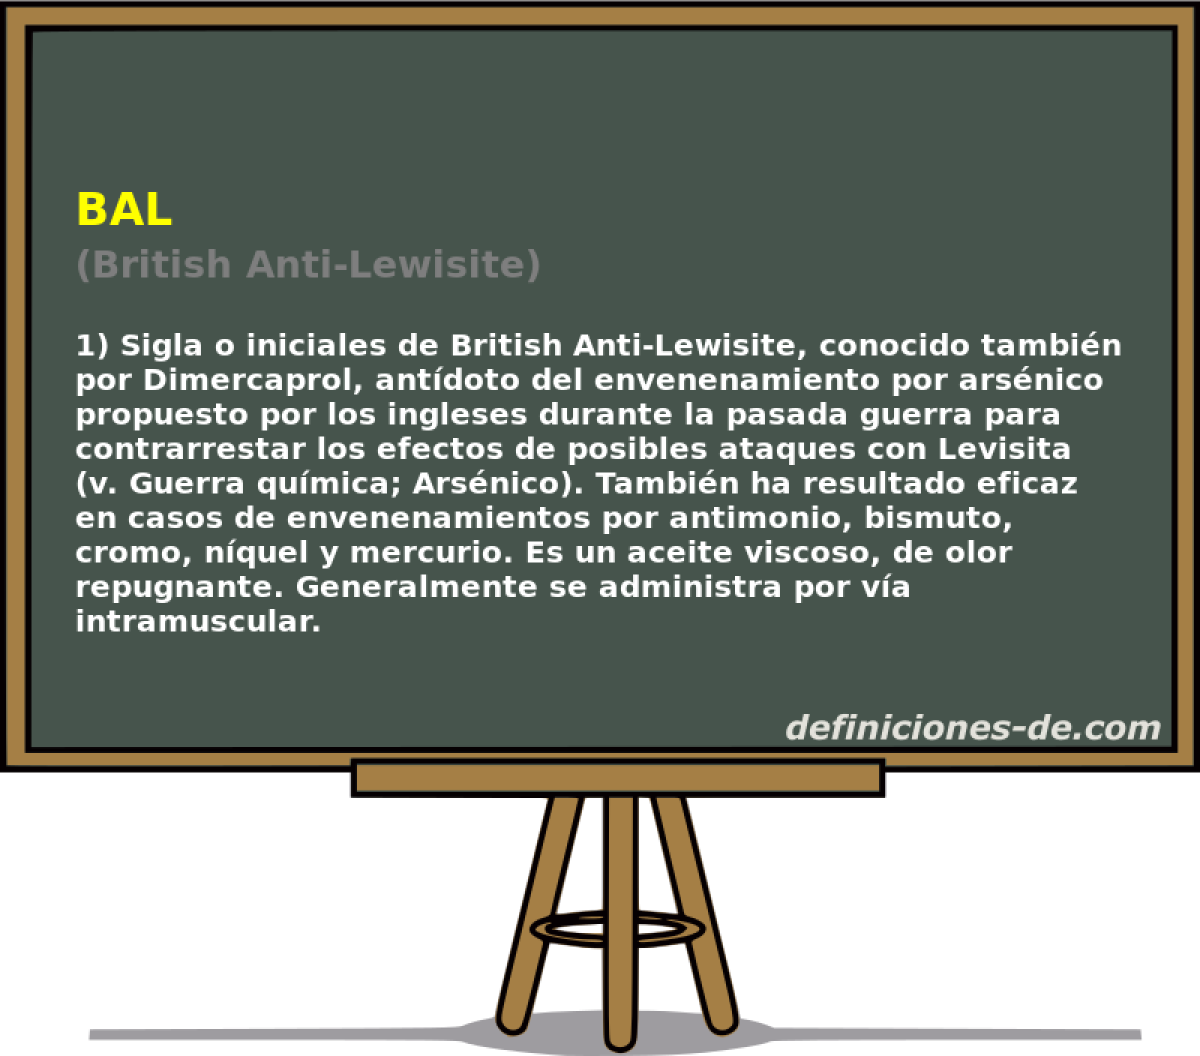 BAL (British Anti-Lewisite)